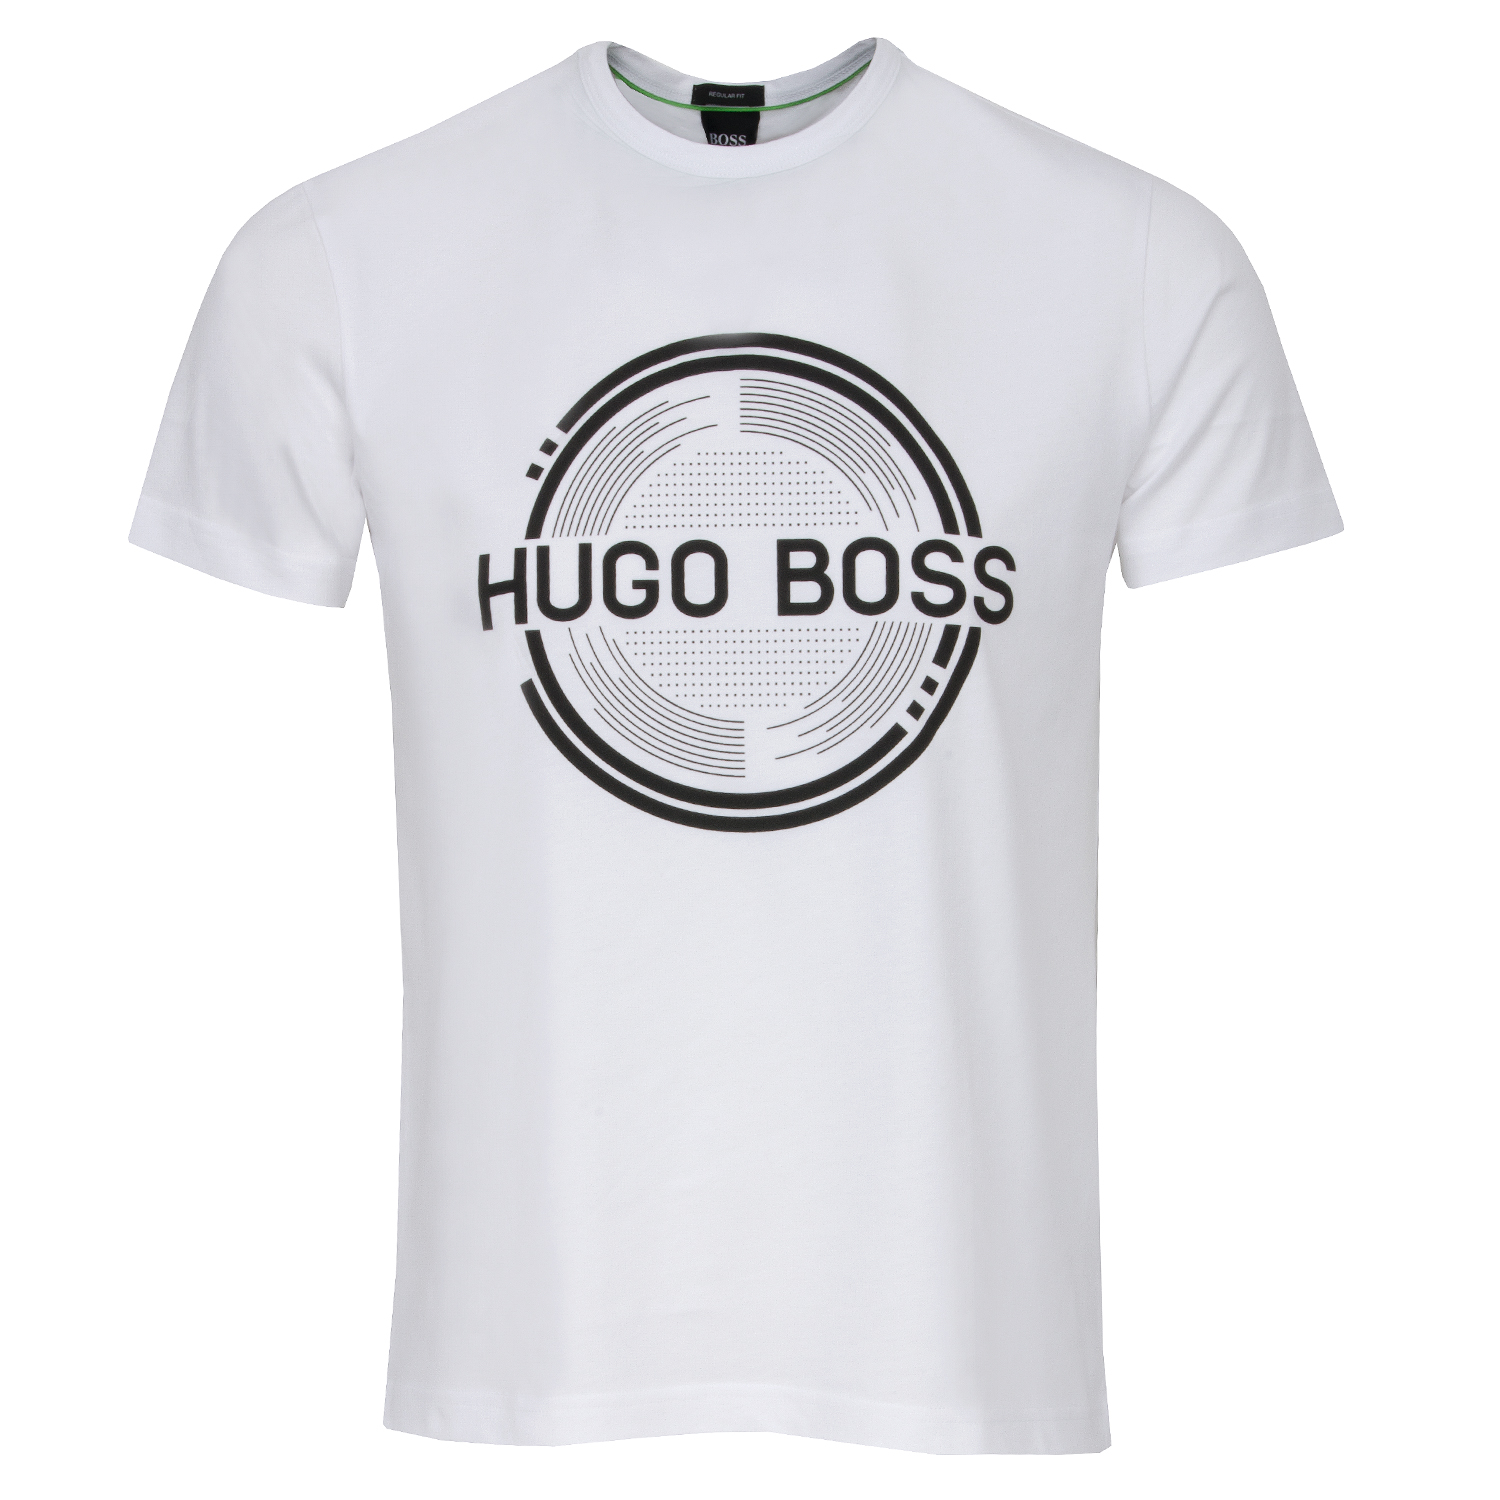 HUGO BOSS ATHLEISURE Tee 1 T-Shirt White | Scottsdale Golf